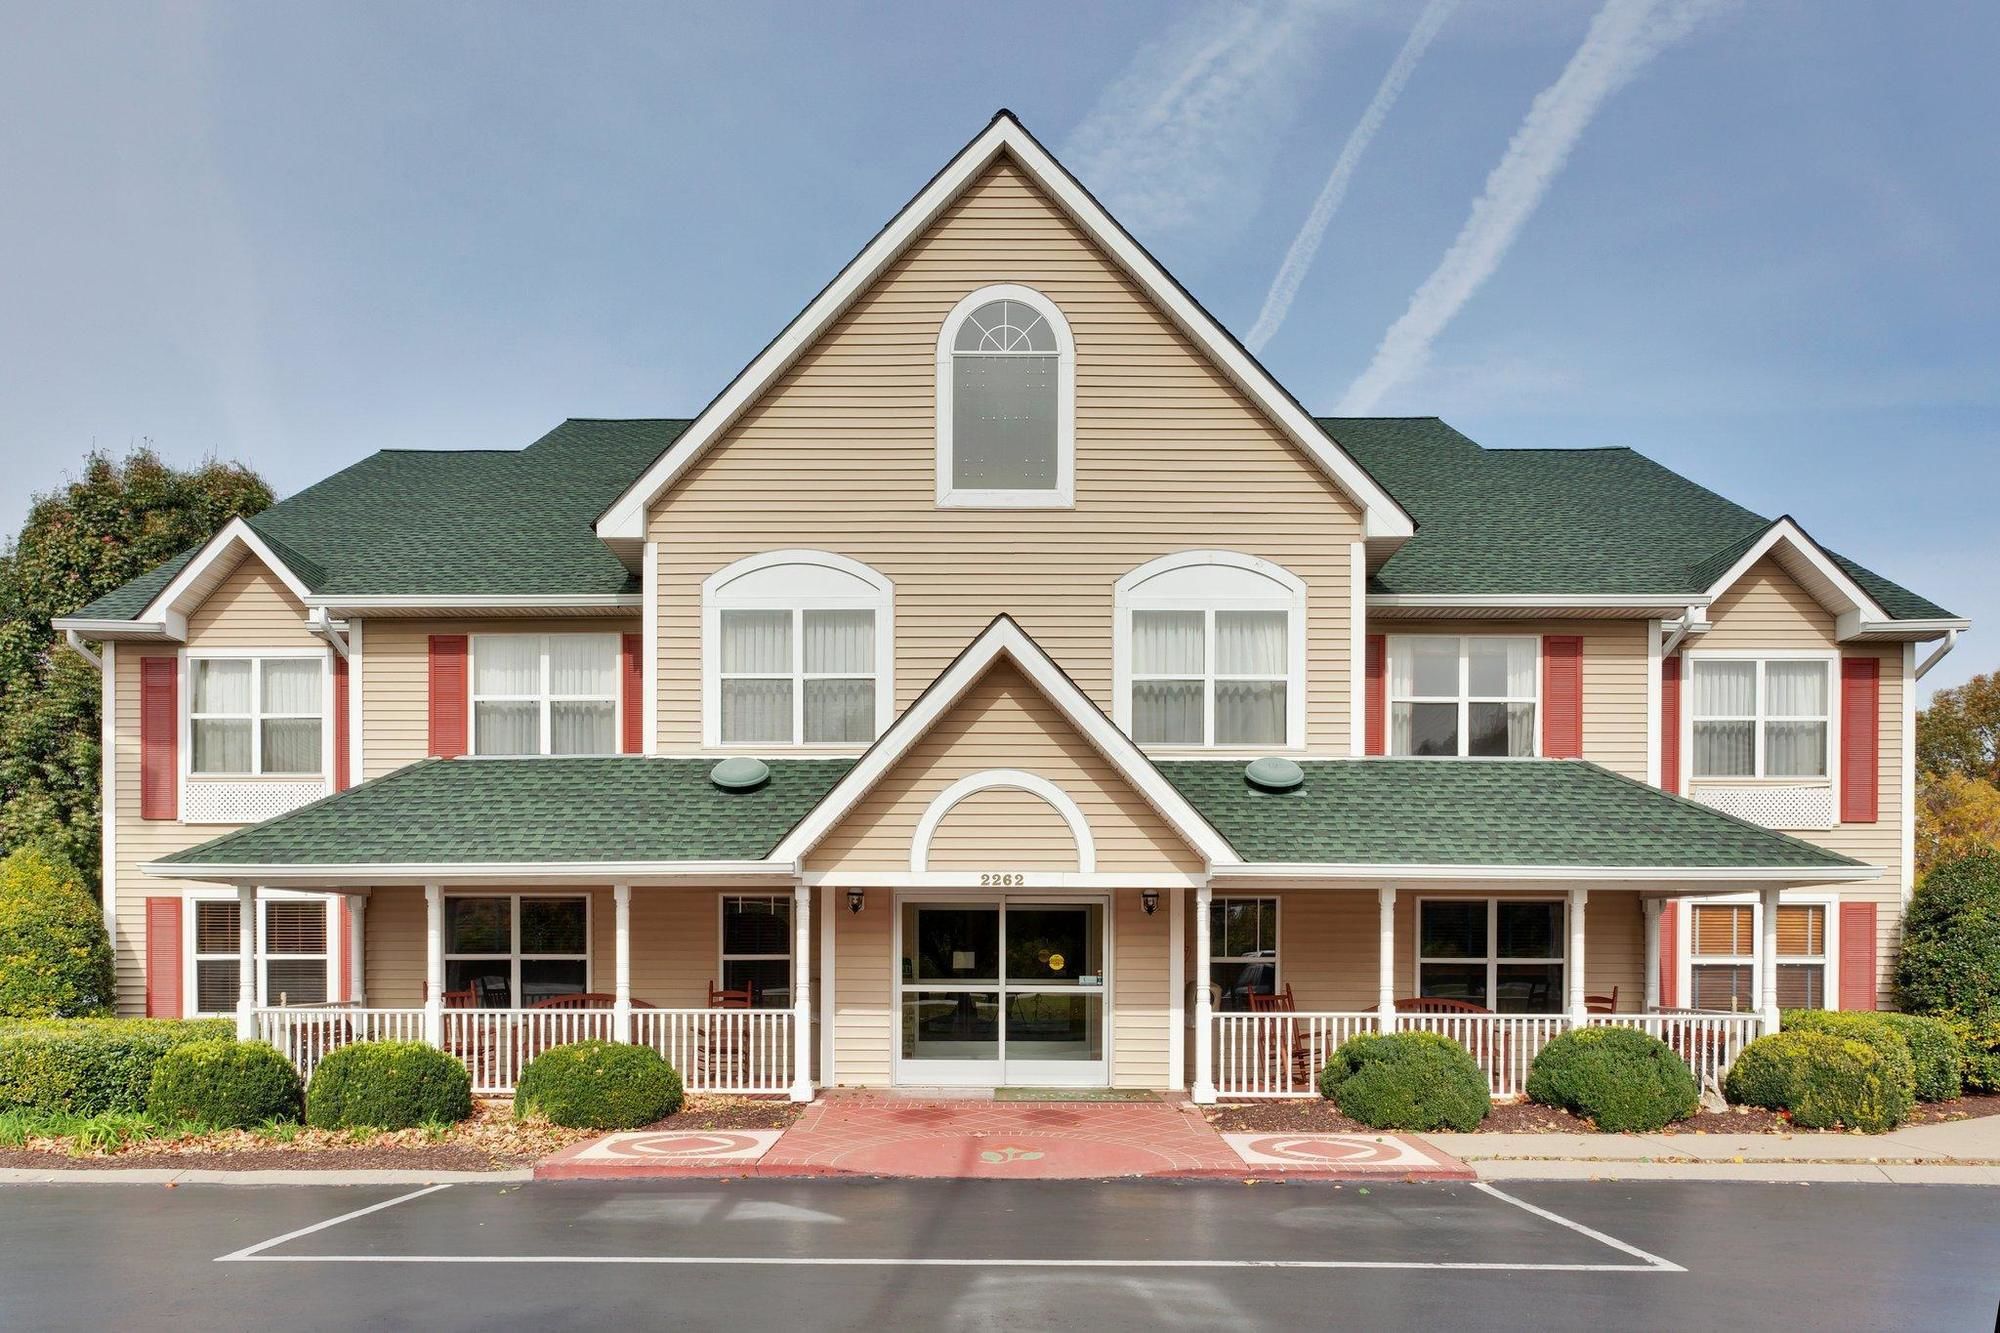 Country Inn & Suites by Radisson, Murfreesboro, TN